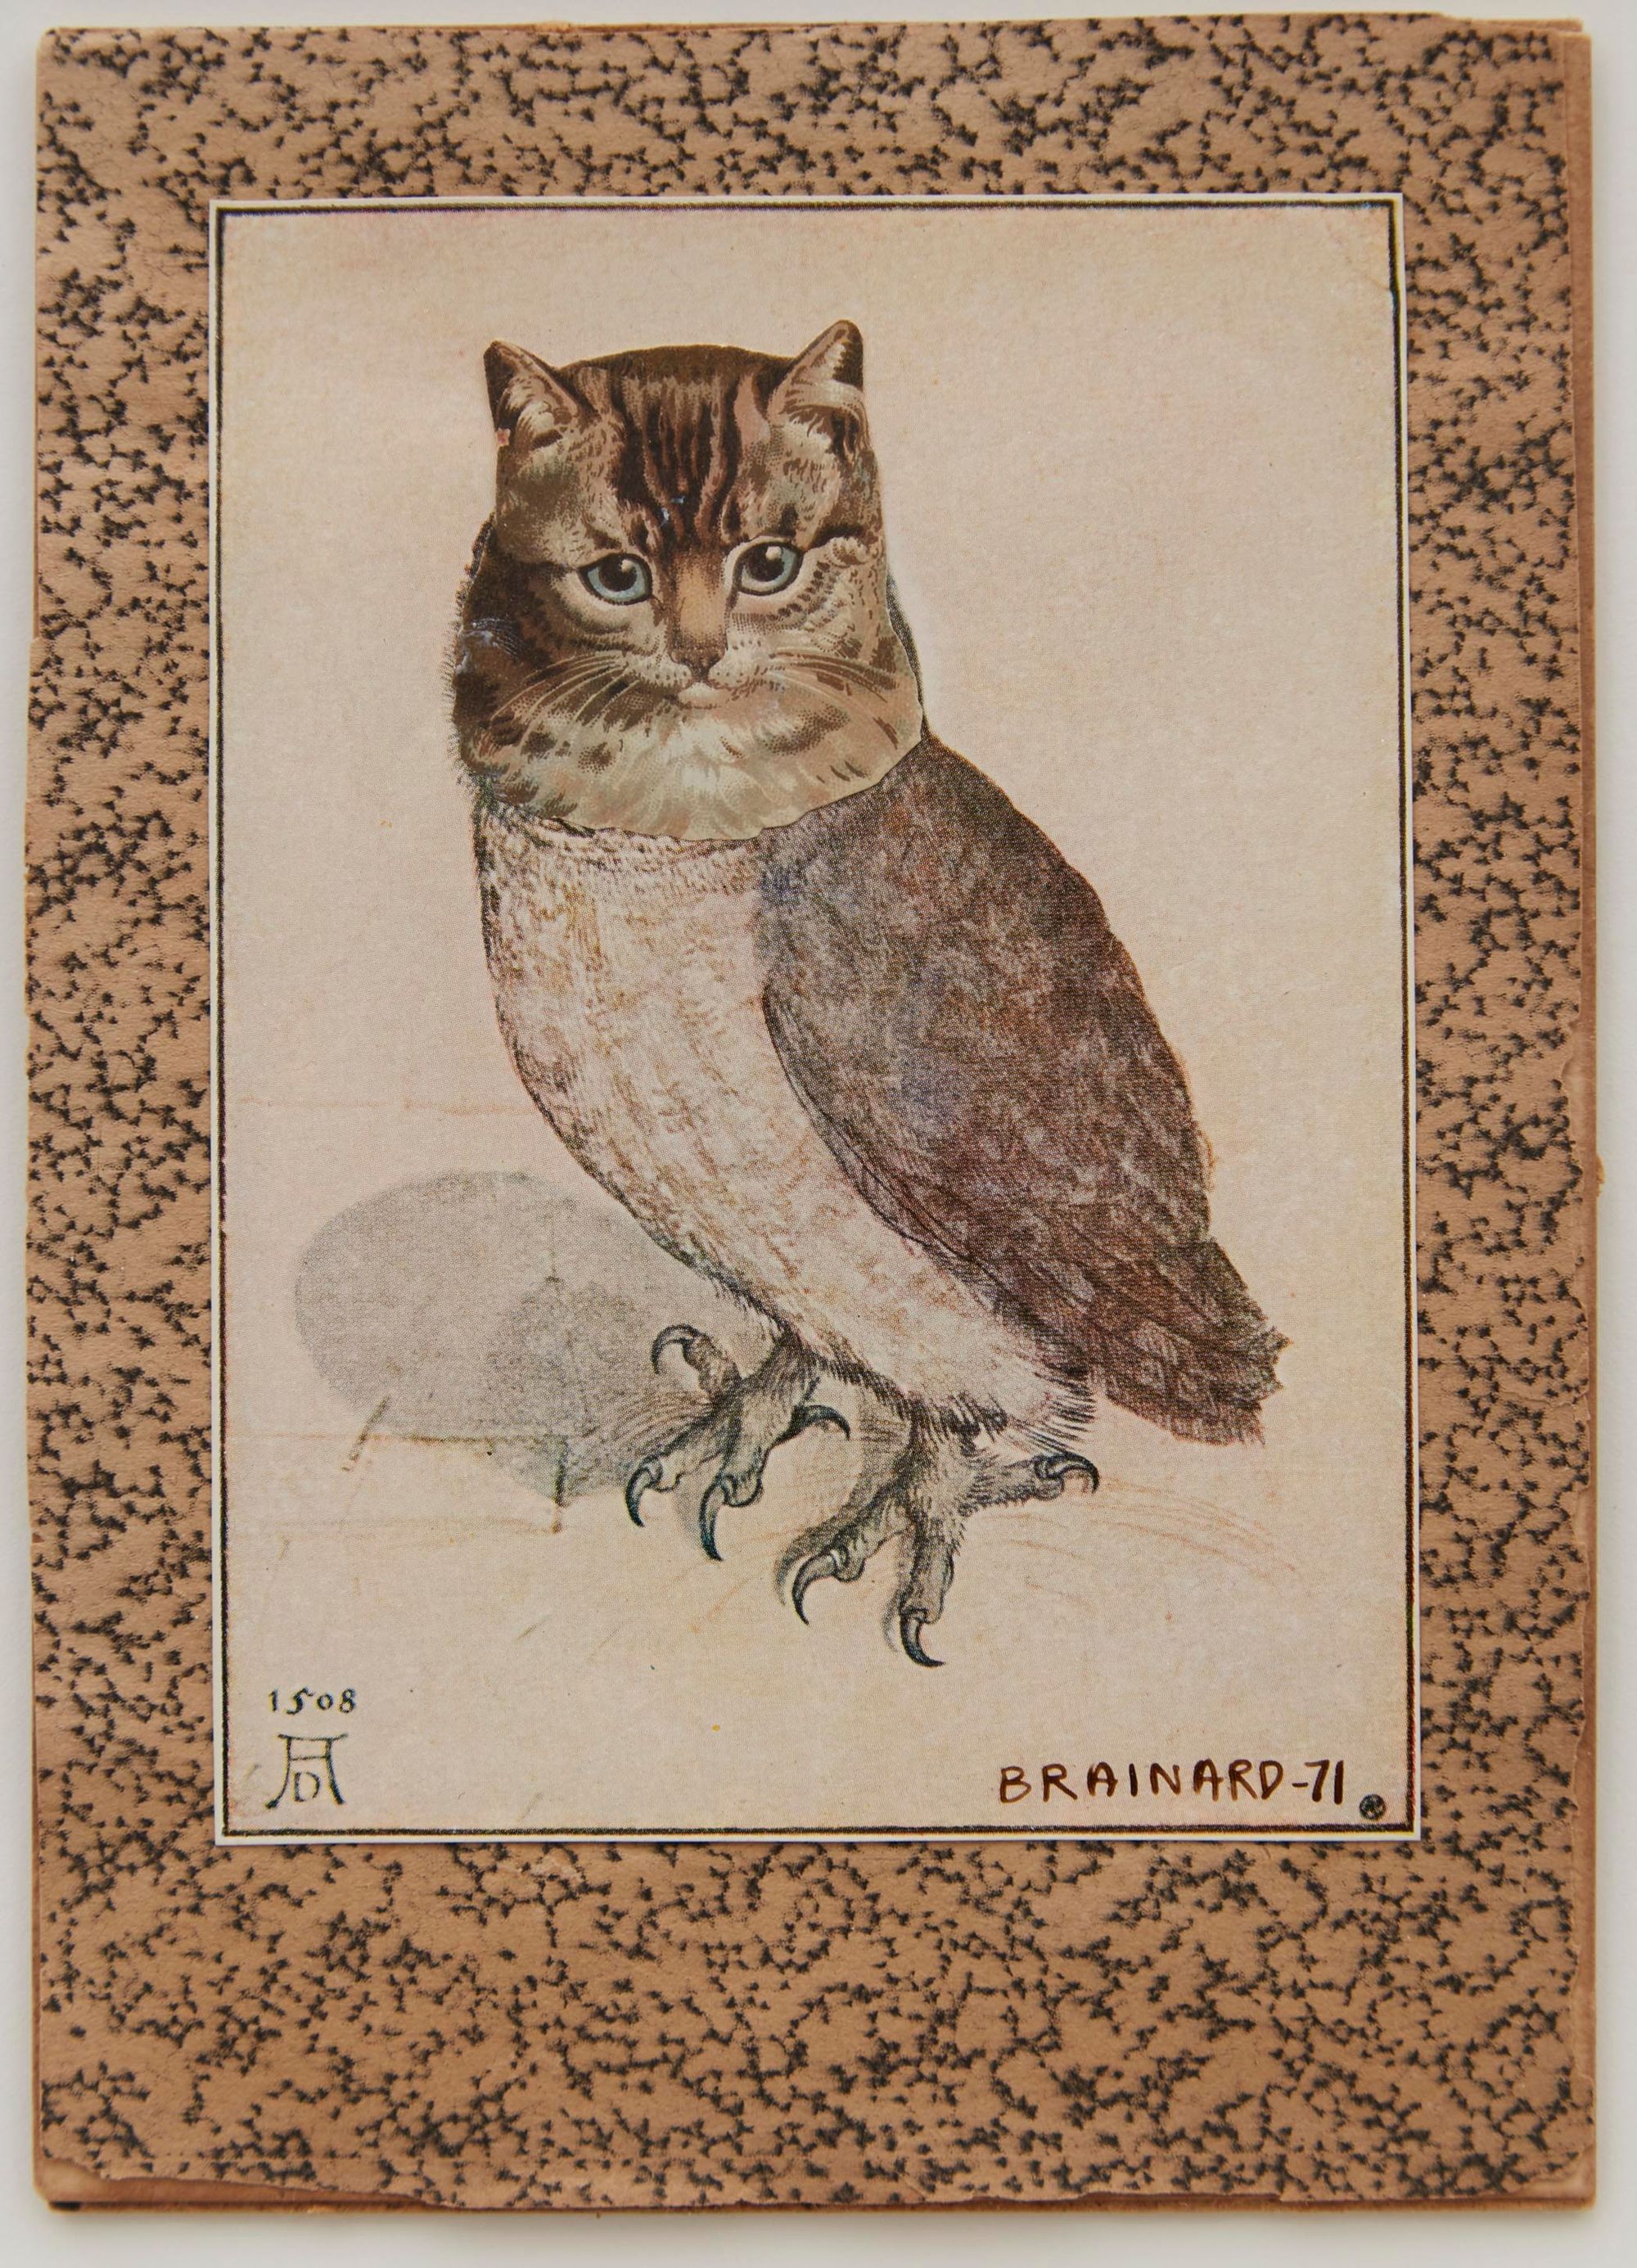 Joe Brainard Untitled (Owl Cat), 1971 7 x 5 inches.